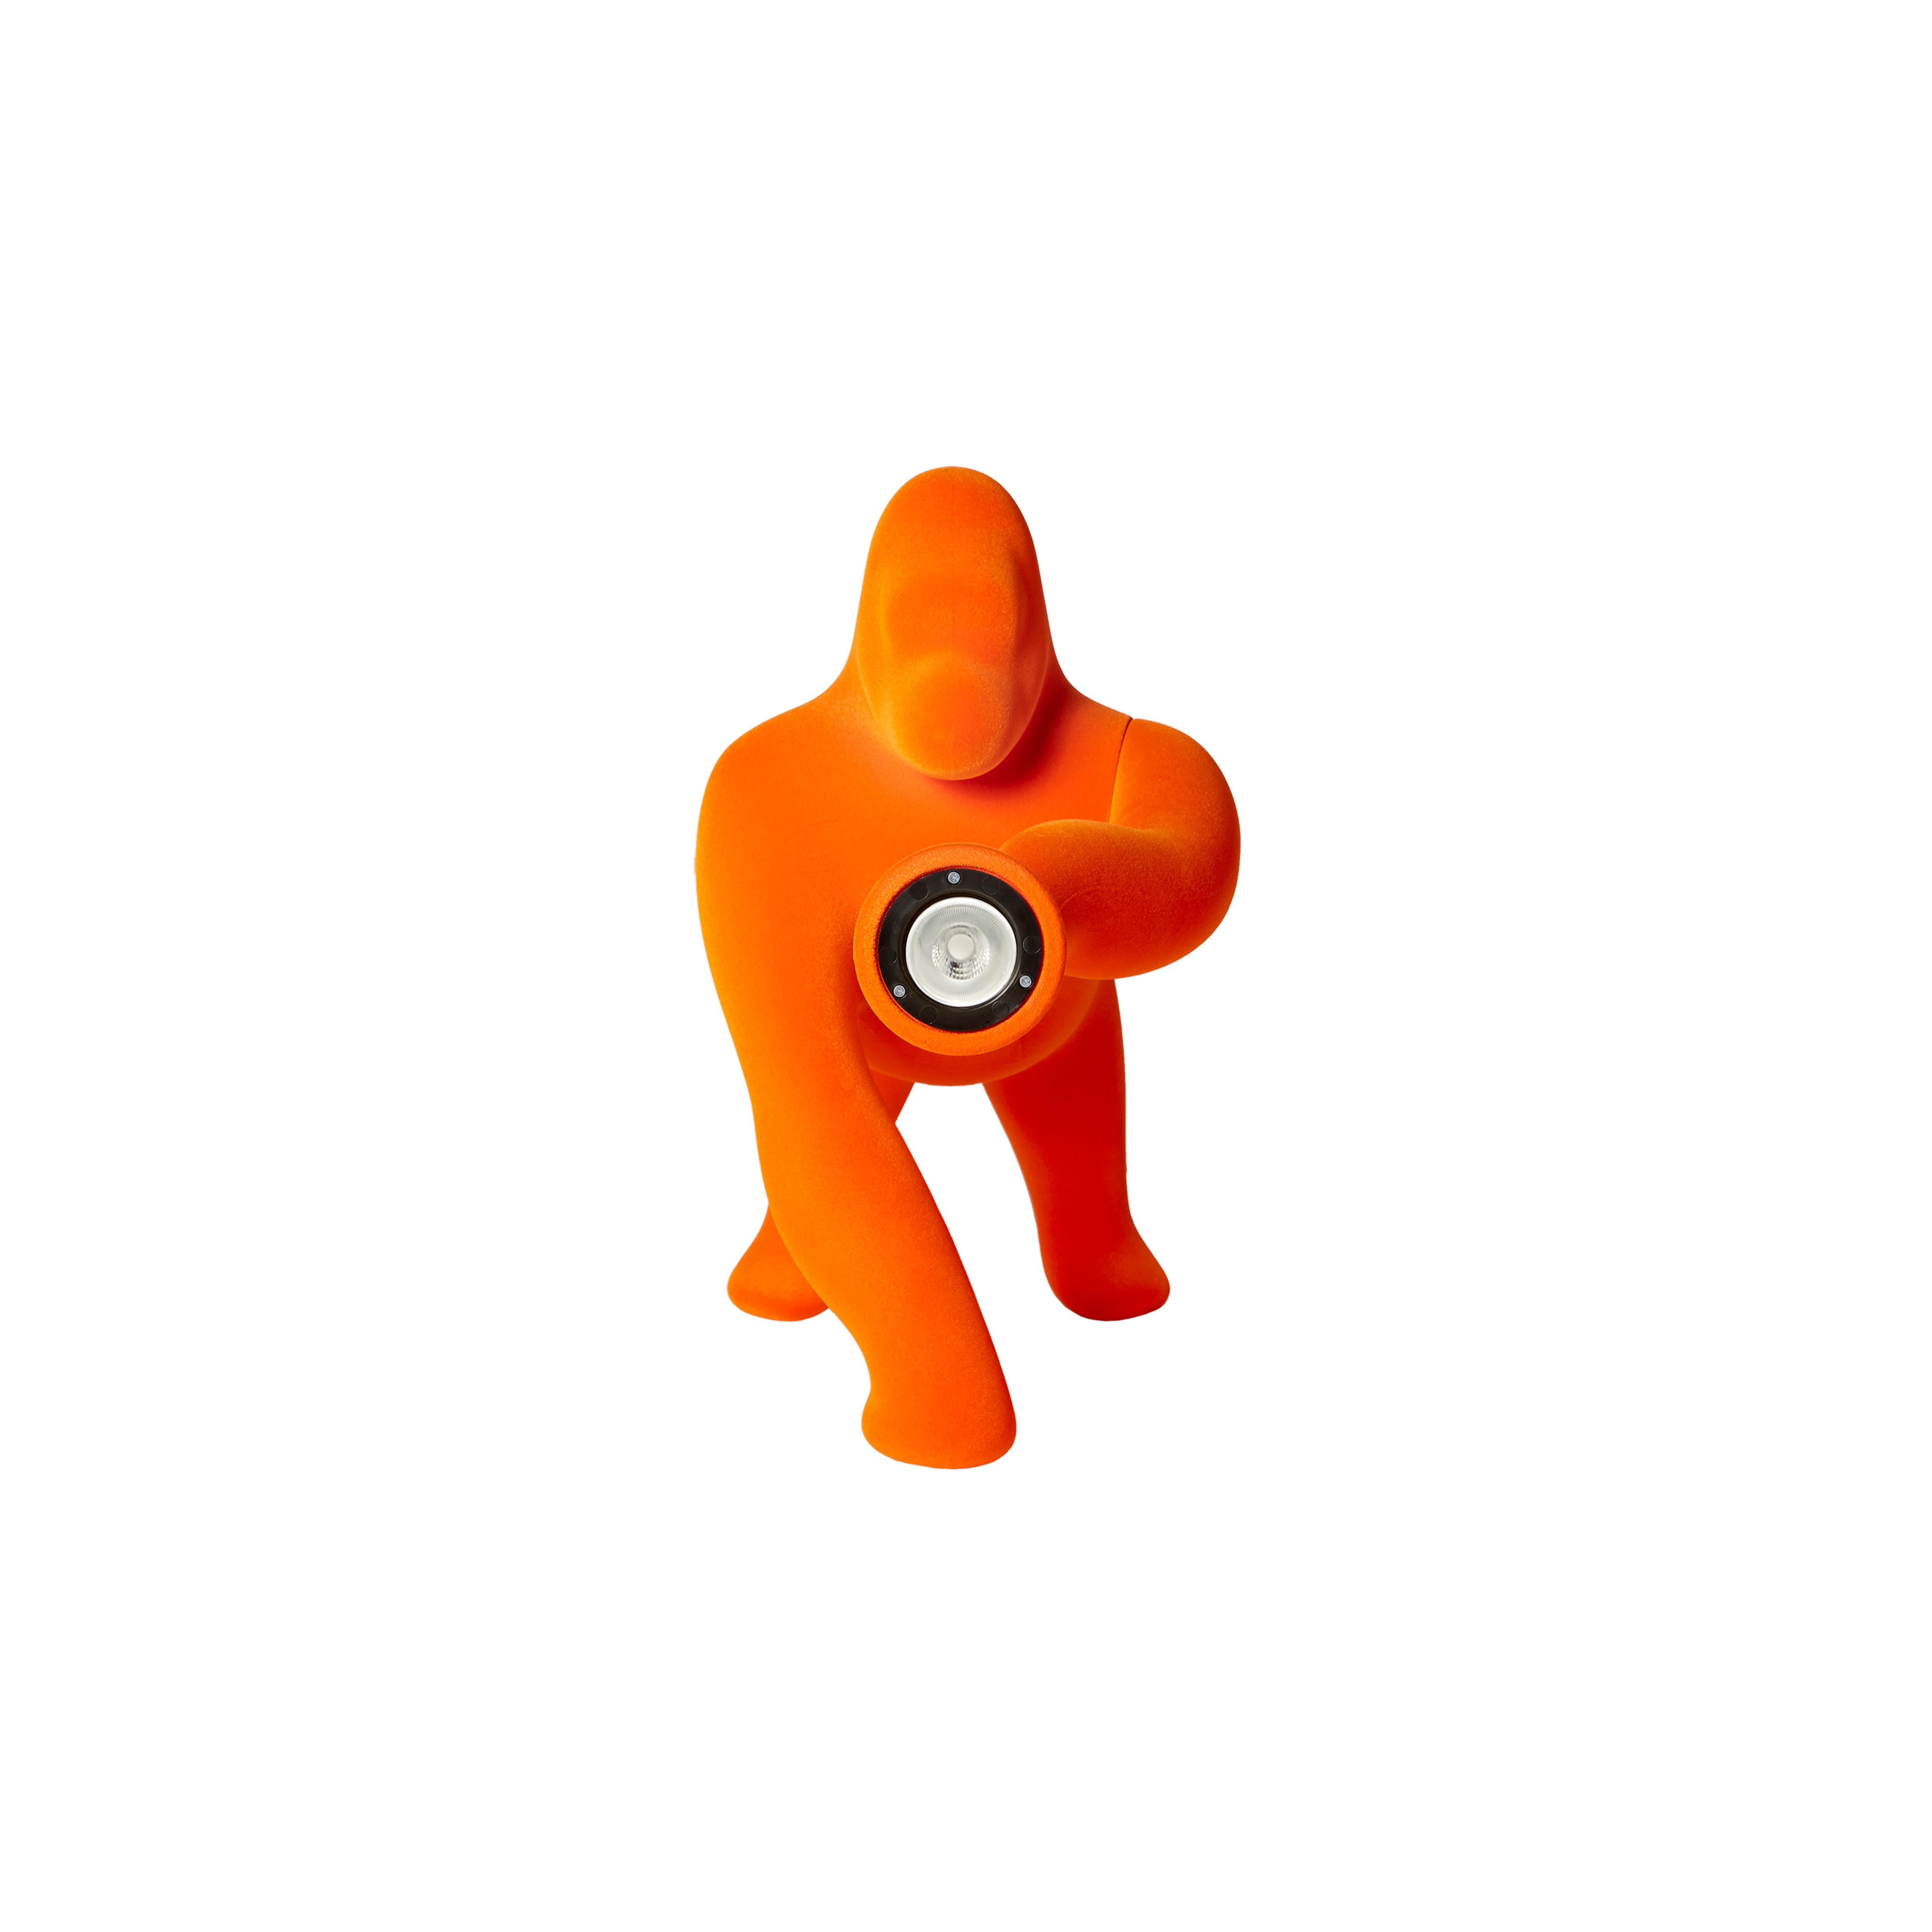 En vente : Orange Petite lampe de table ou lampadaire moderne sculpturale en velours orange Gorilla 3